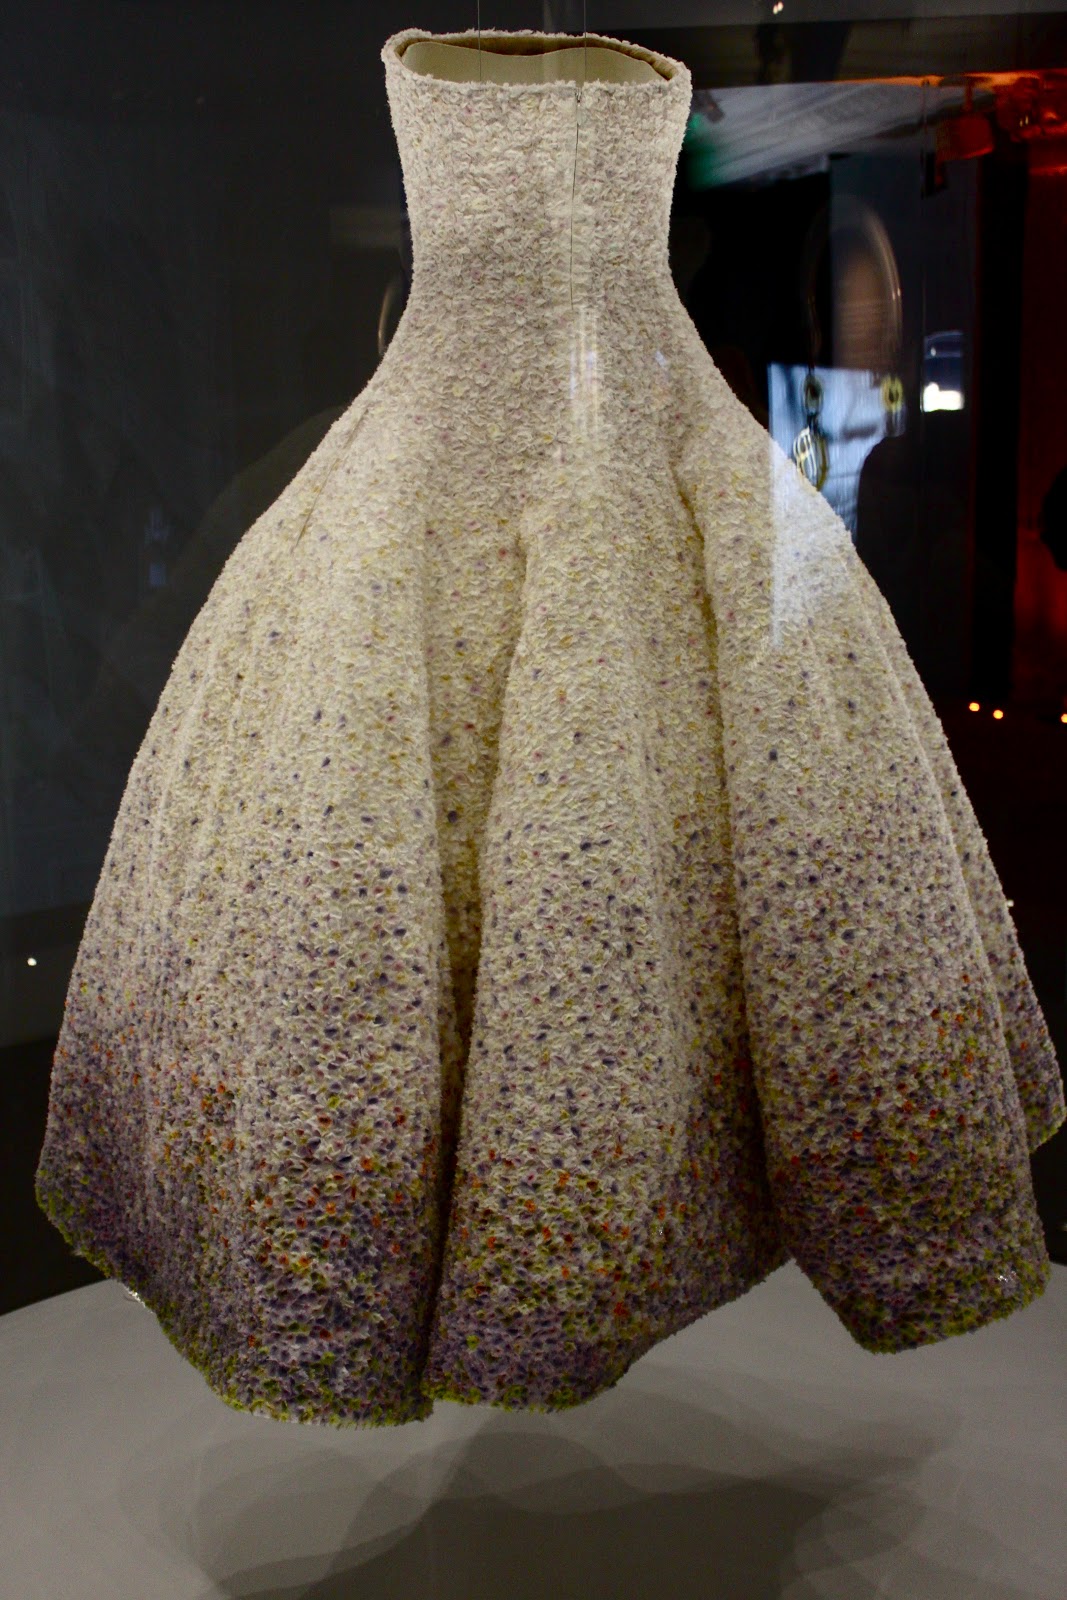 The Audrey-Grace Diaries: J'adore Dior (Exhibits)